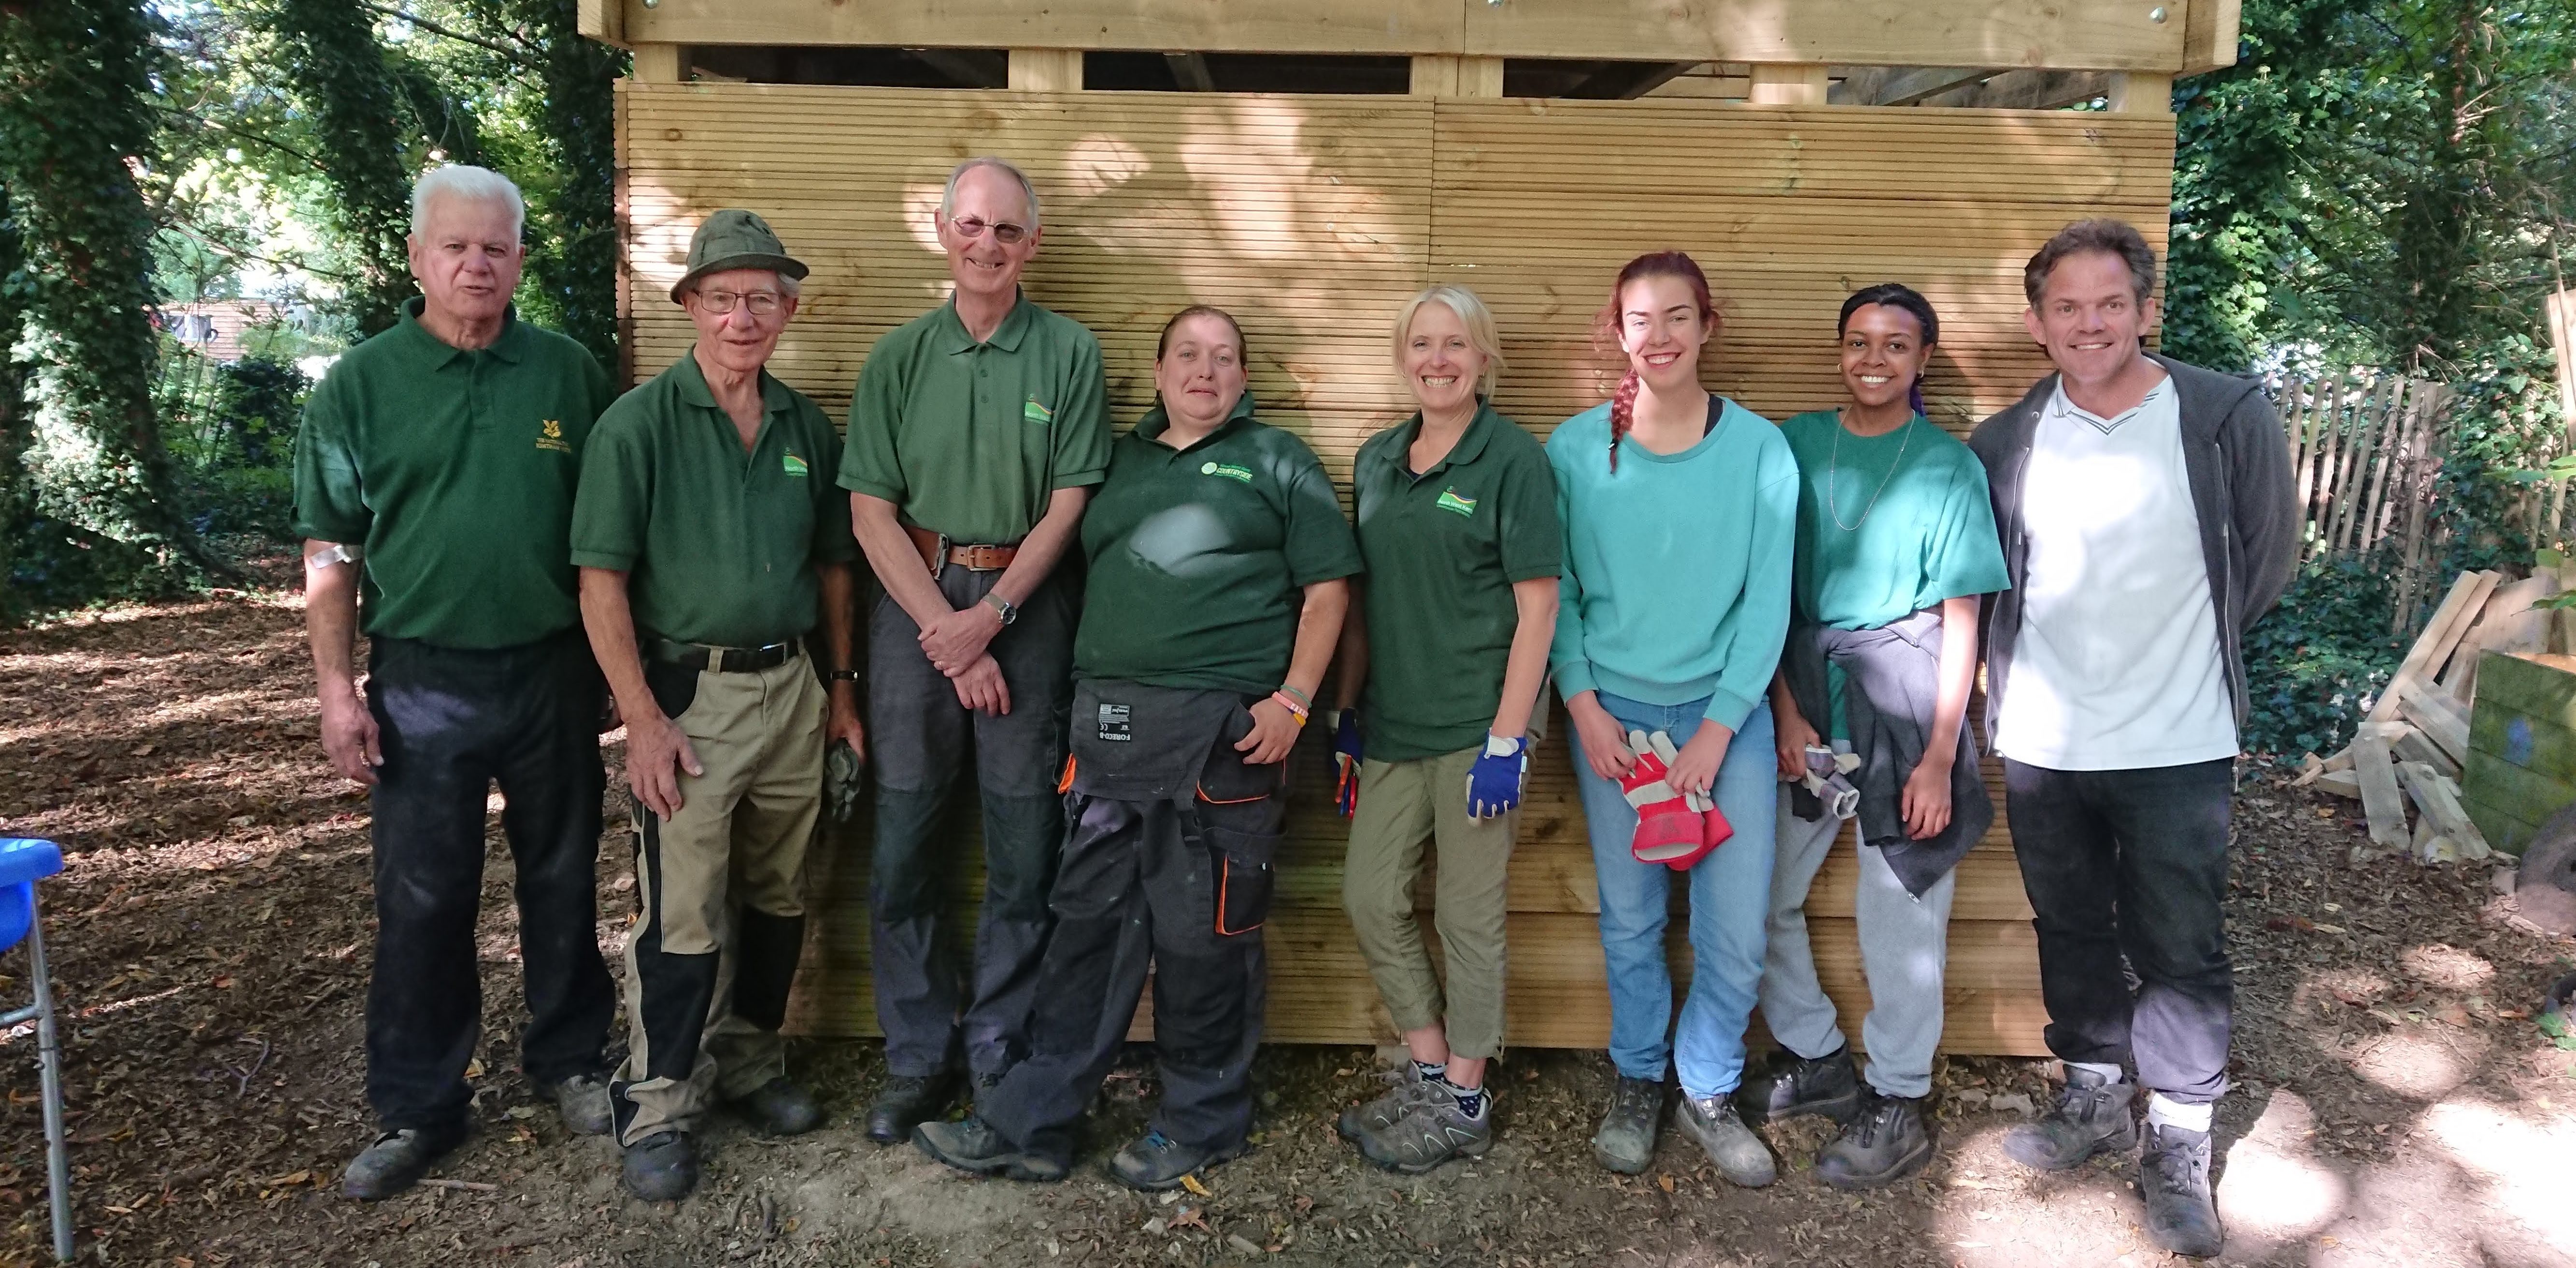 Group photo of volunteers standing in front of outdoor classroom they built at Shoreham Primary School